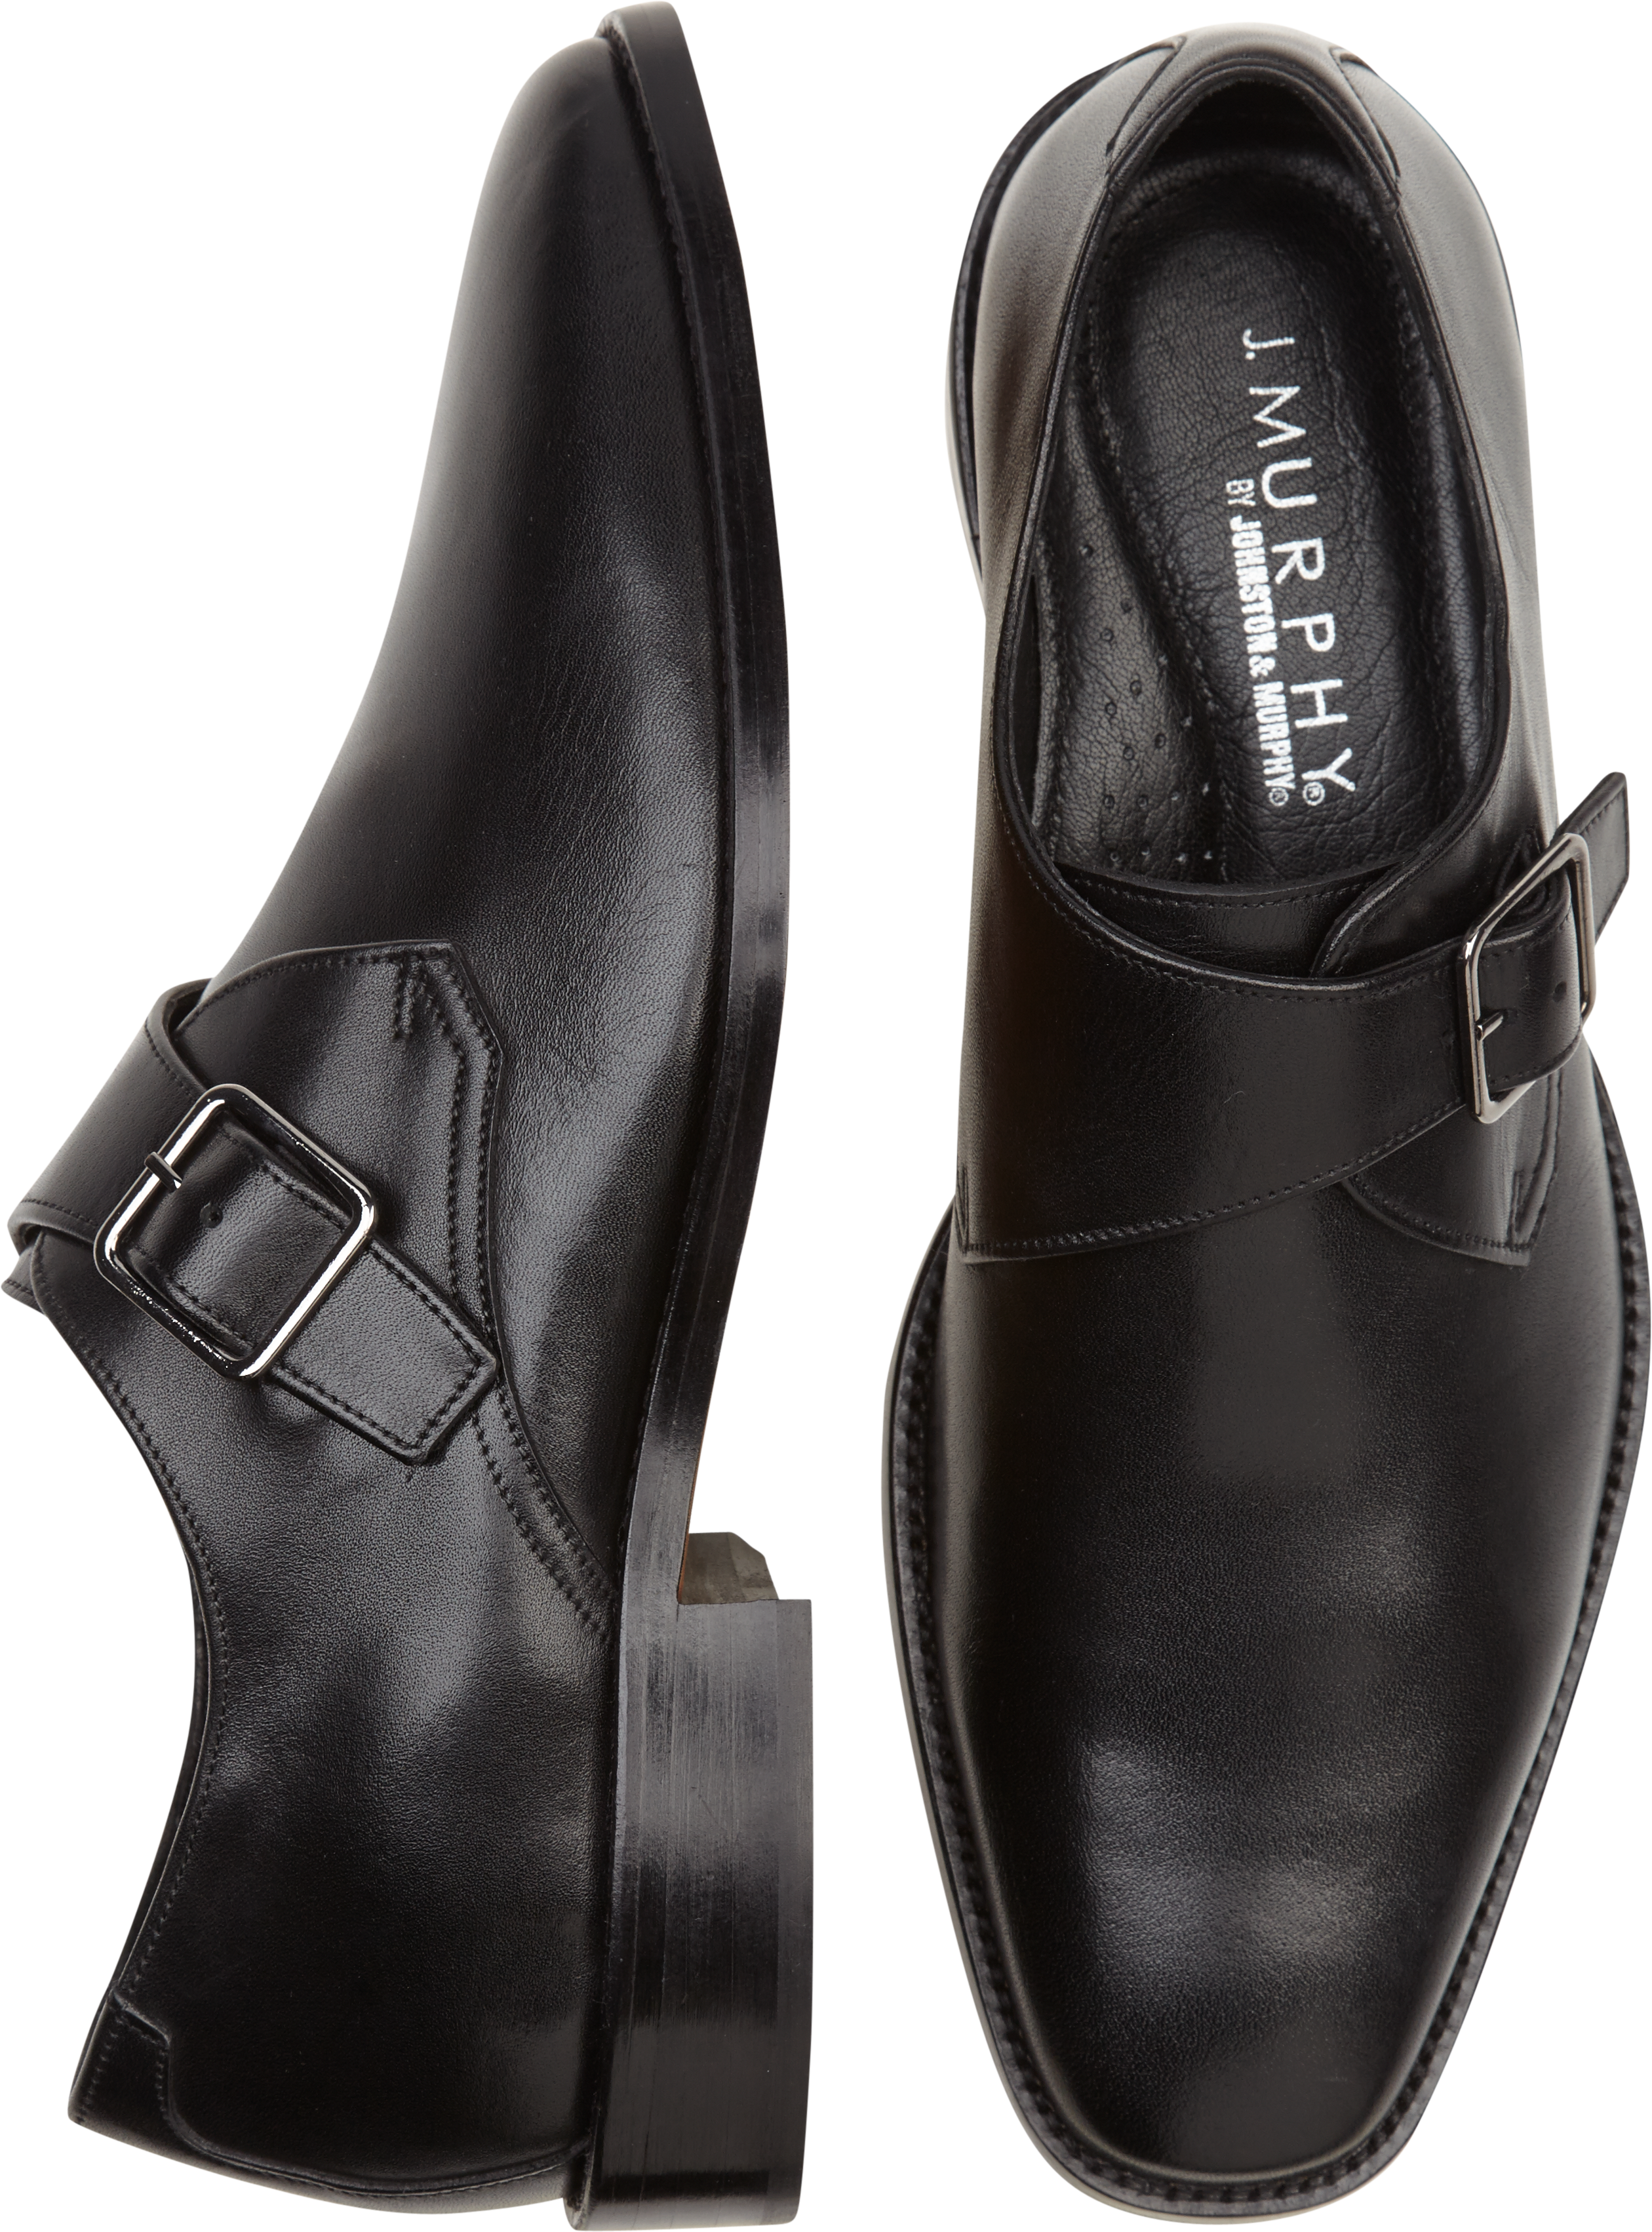 Johnston  Murphy Novick Black Monk Strap Shoes - Dress Shoes | Men's ...